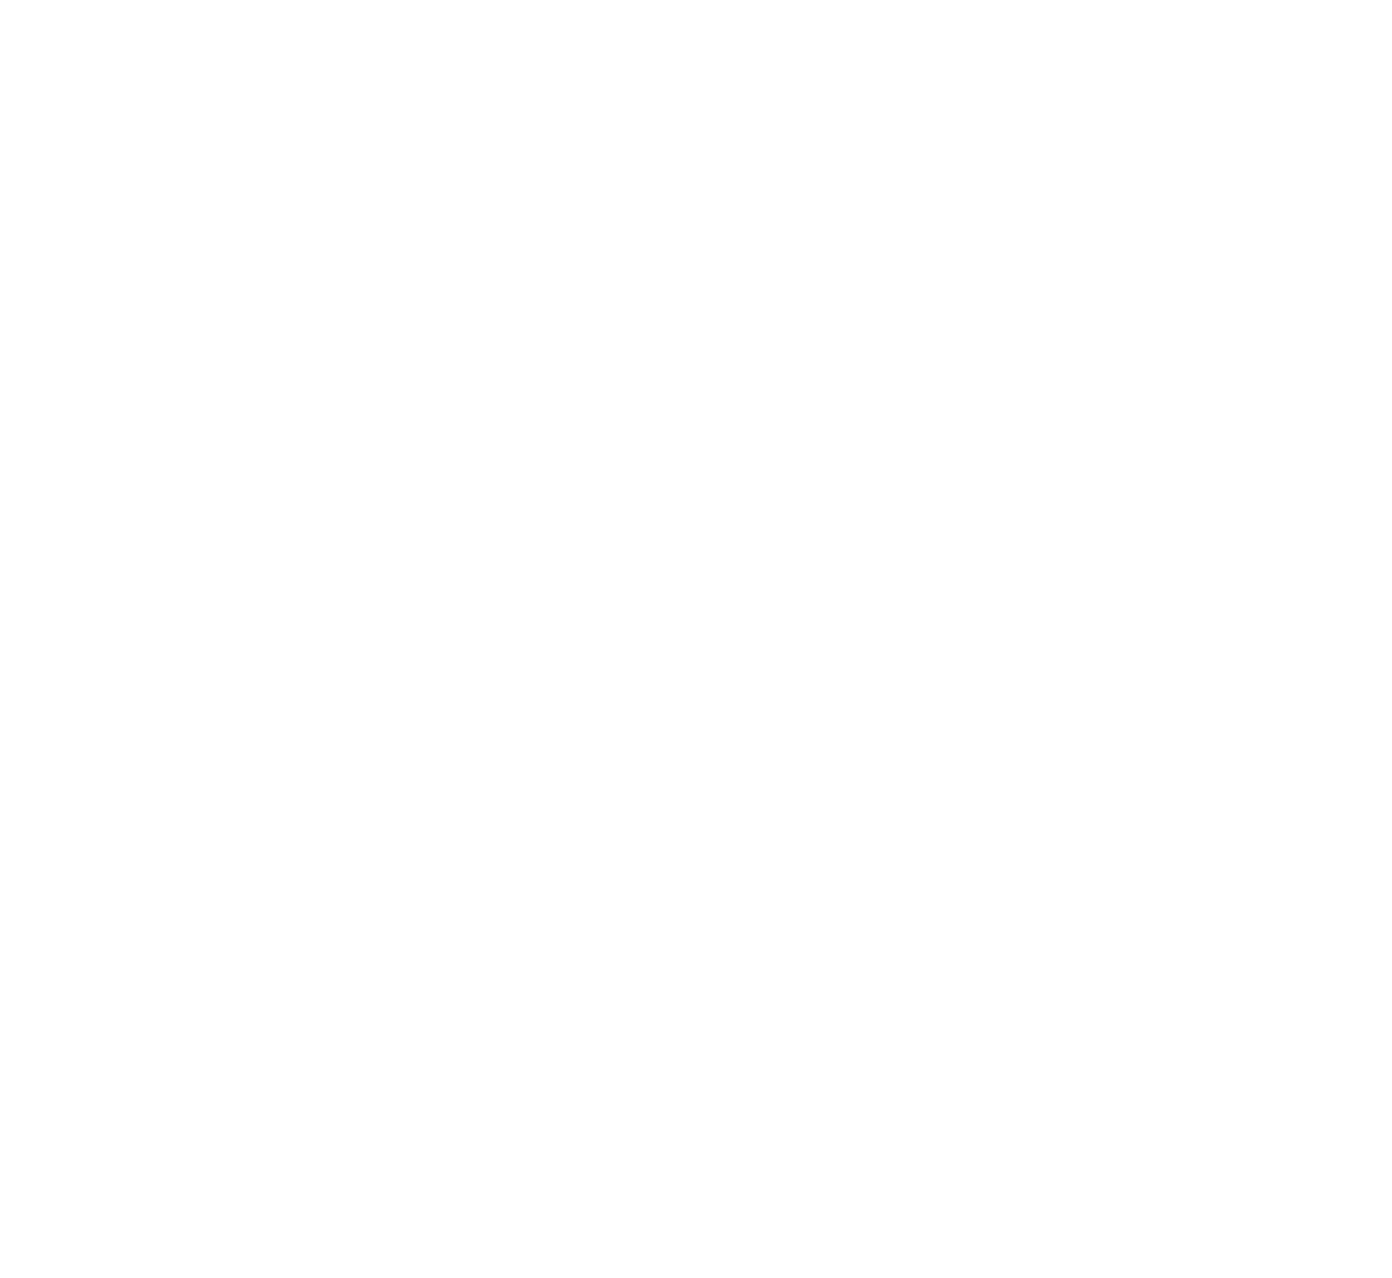 Boondocking: Maxwell National Wildlife Refuge, Maxwell, NM - Adventures with TuckNae